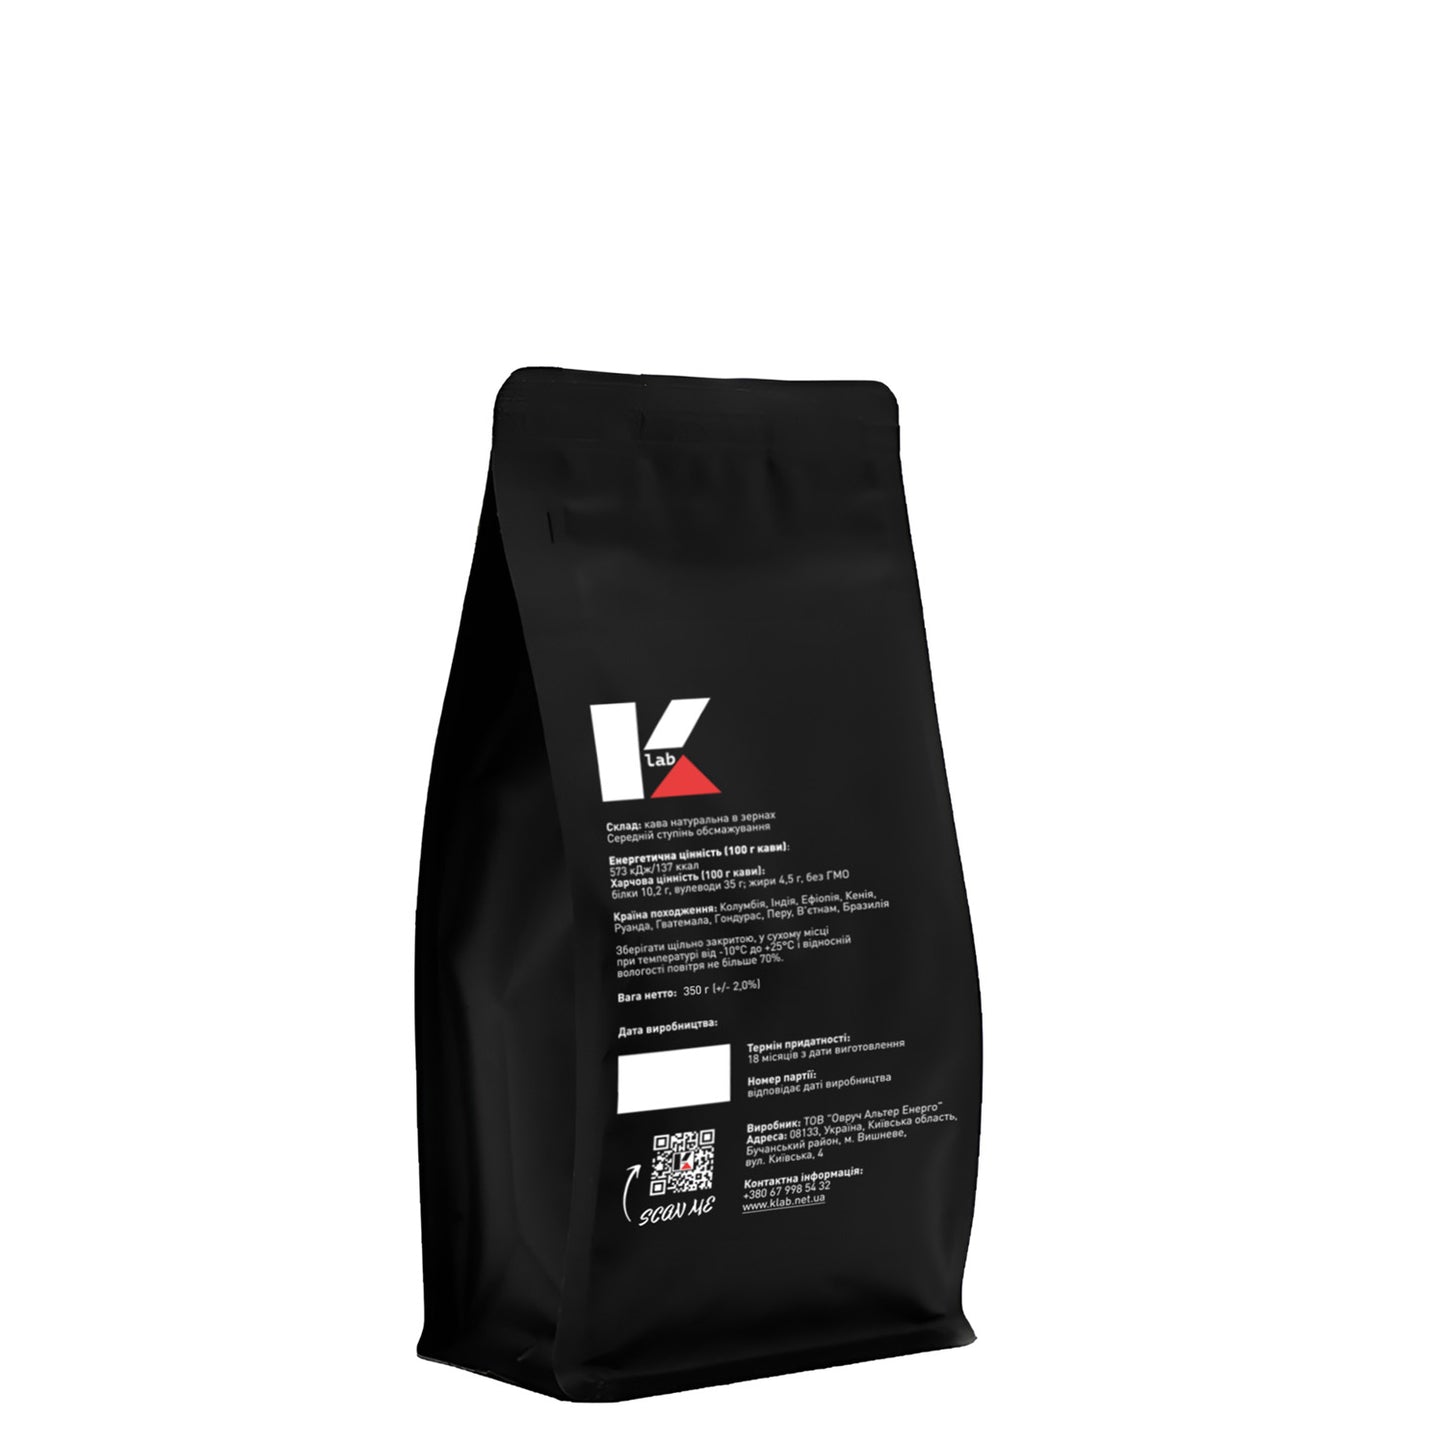 COFFEE STORY №4 - Klab (0.35kg back)